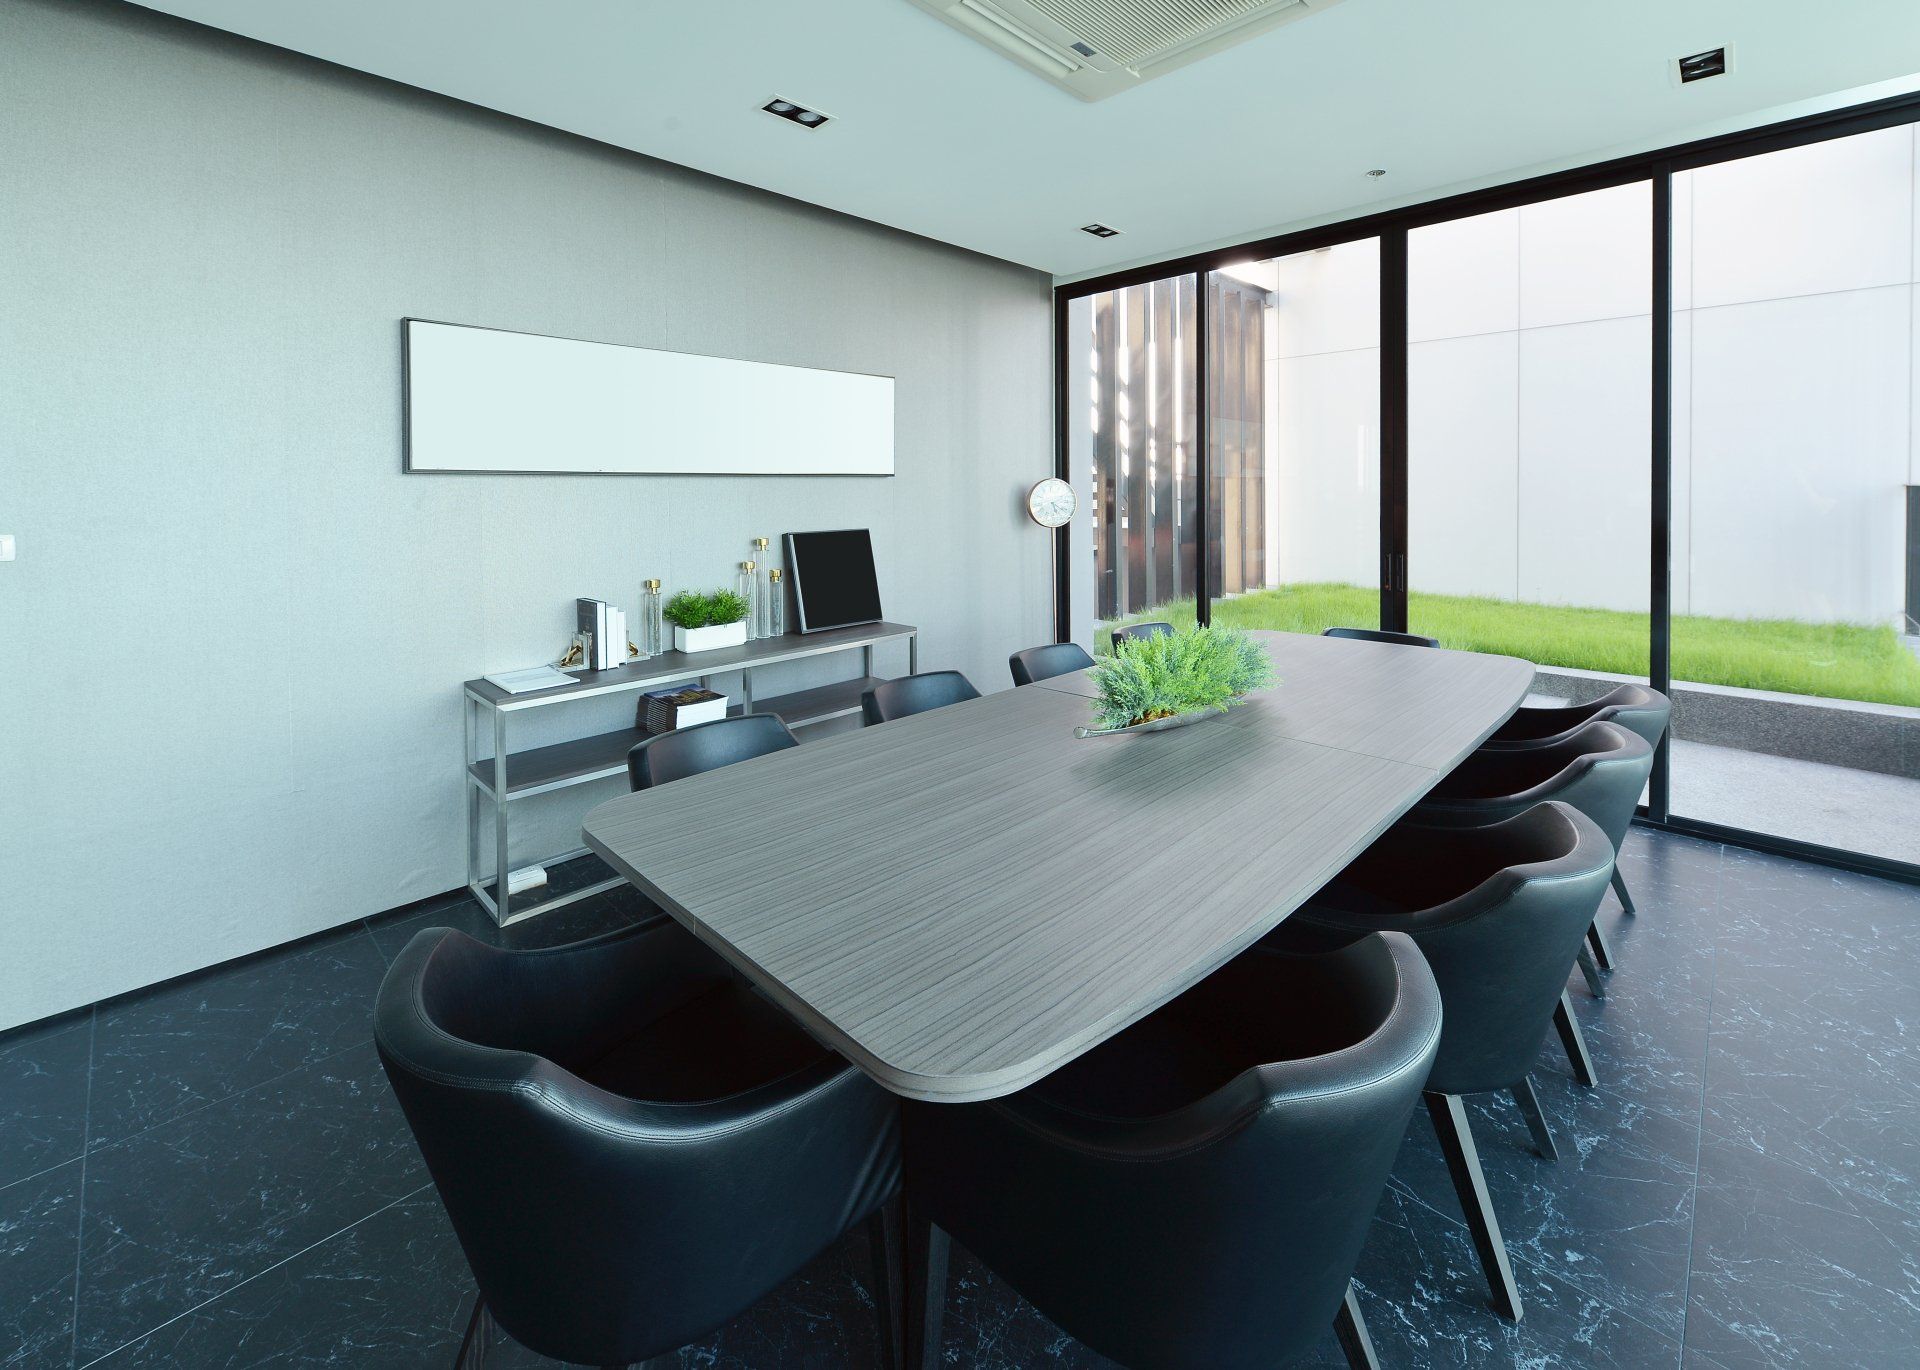 luxury modern meeting room interior and decoration, interior design